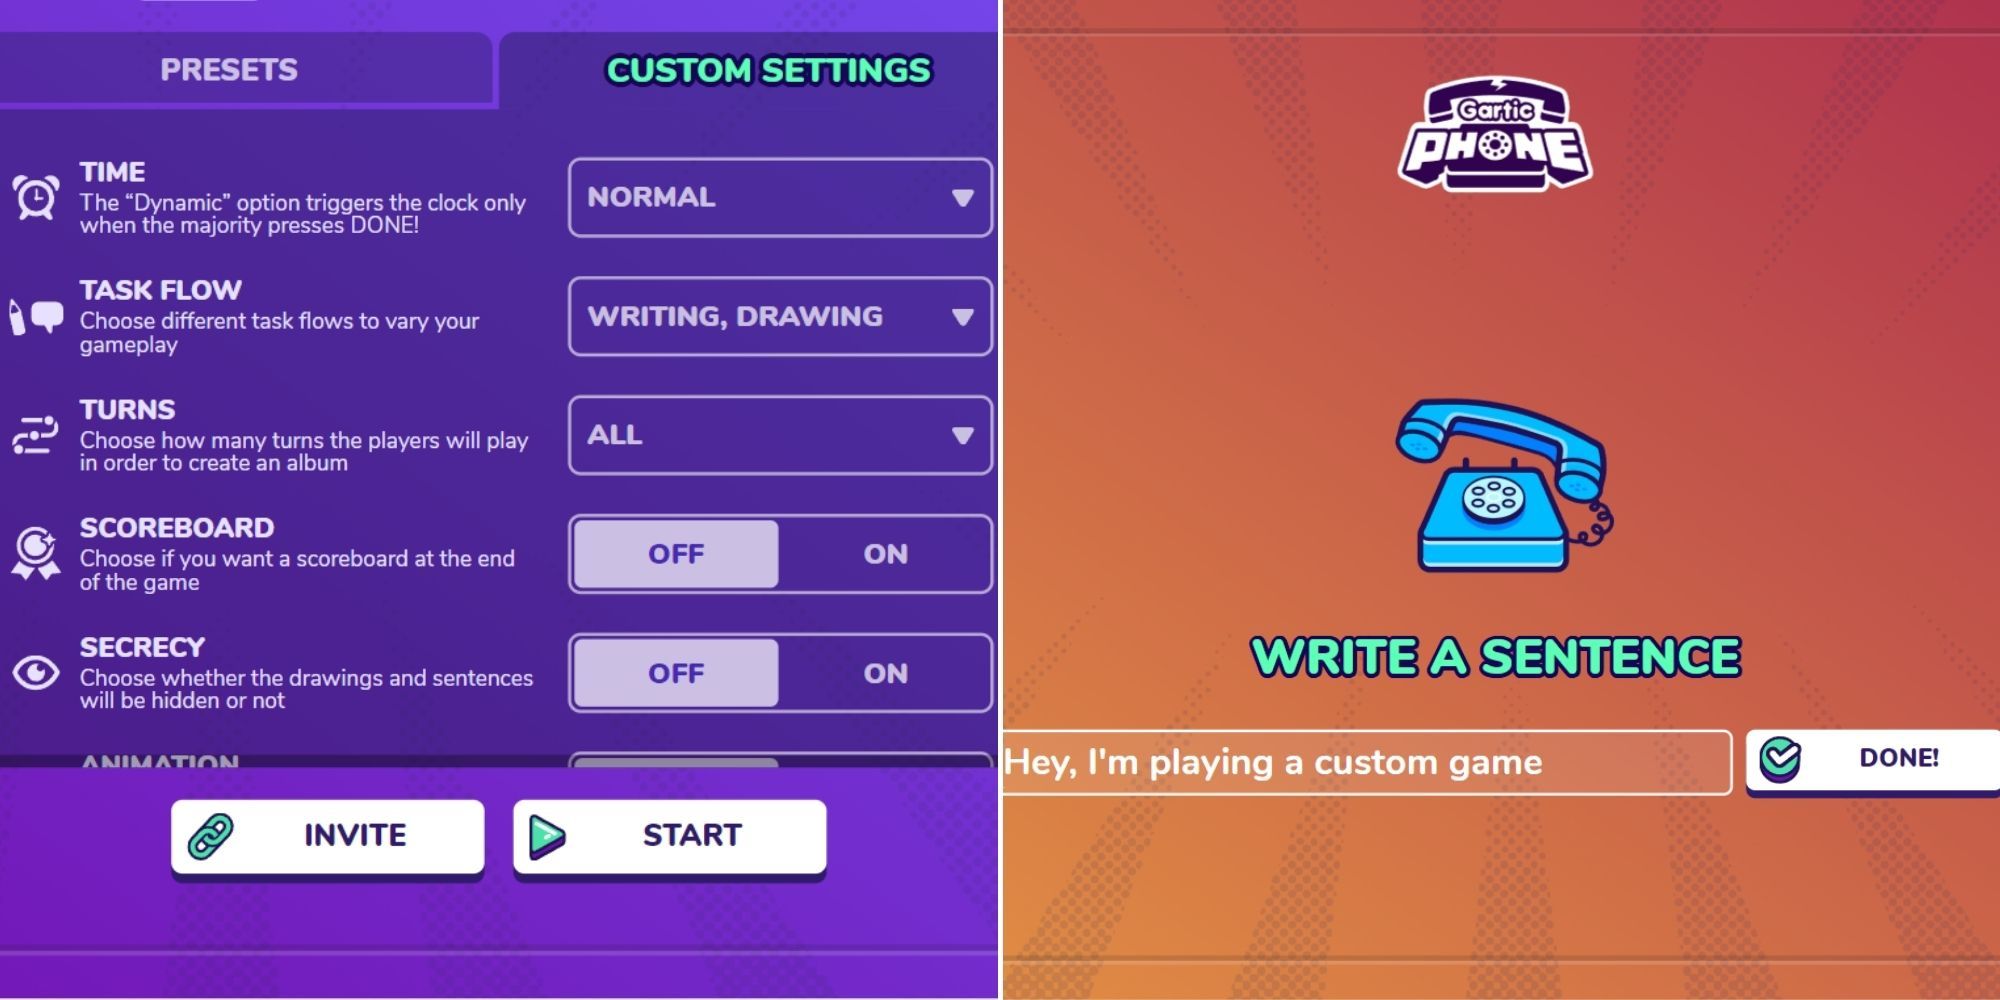 Gartic Phone - Custom Settings Menu - The start of a custom game